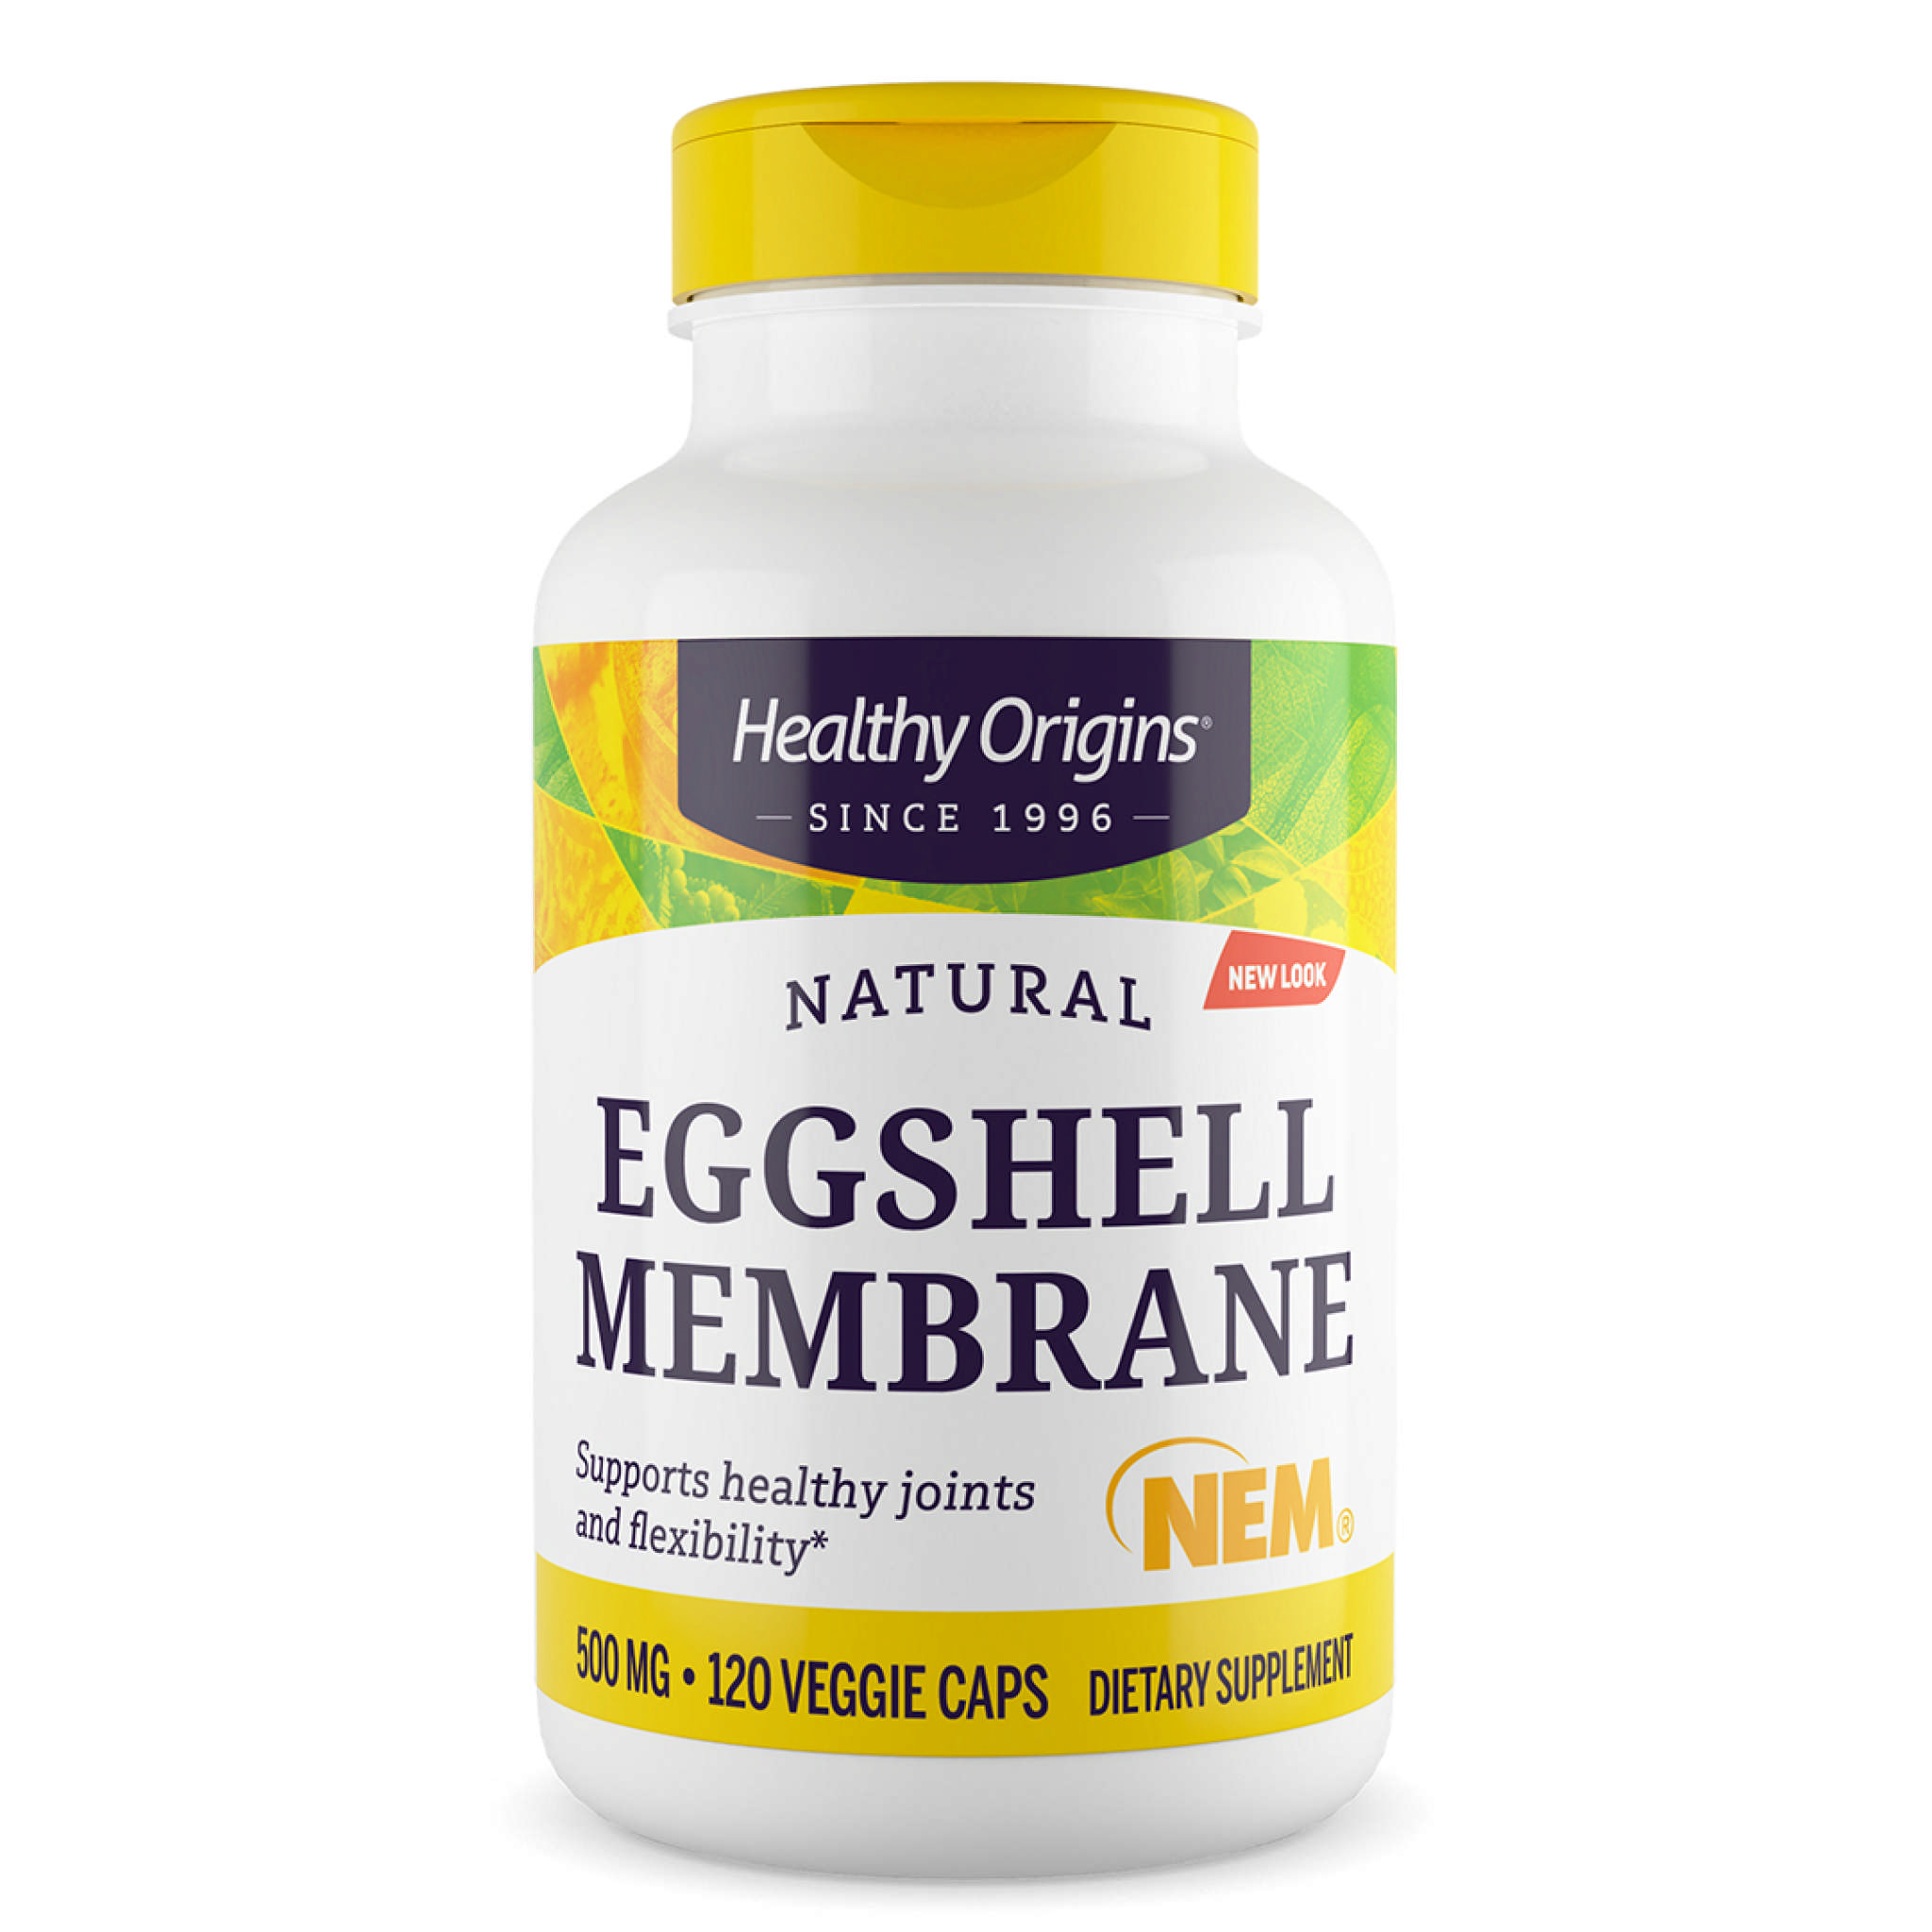 Healthy Origins - Eggshell Membrane 500 Nem